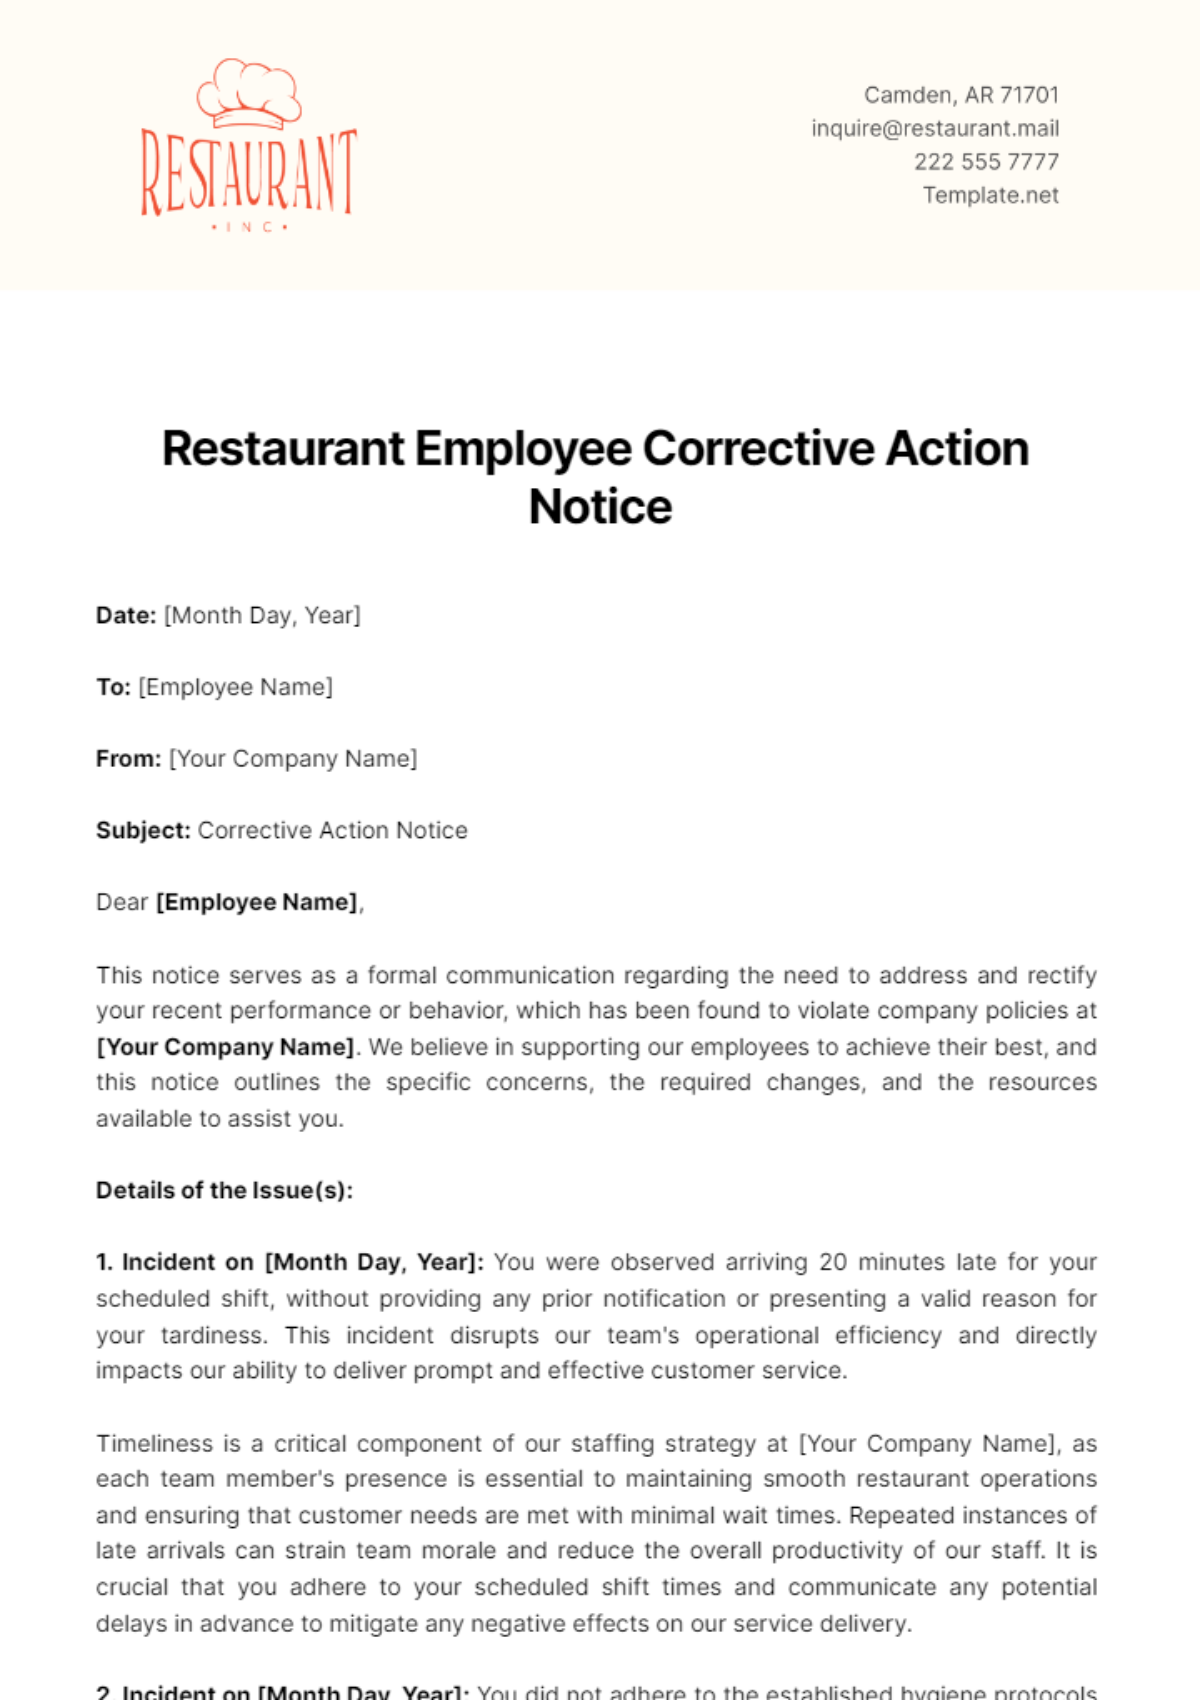 Free Restaurant Employee Corrective Action Notice Template